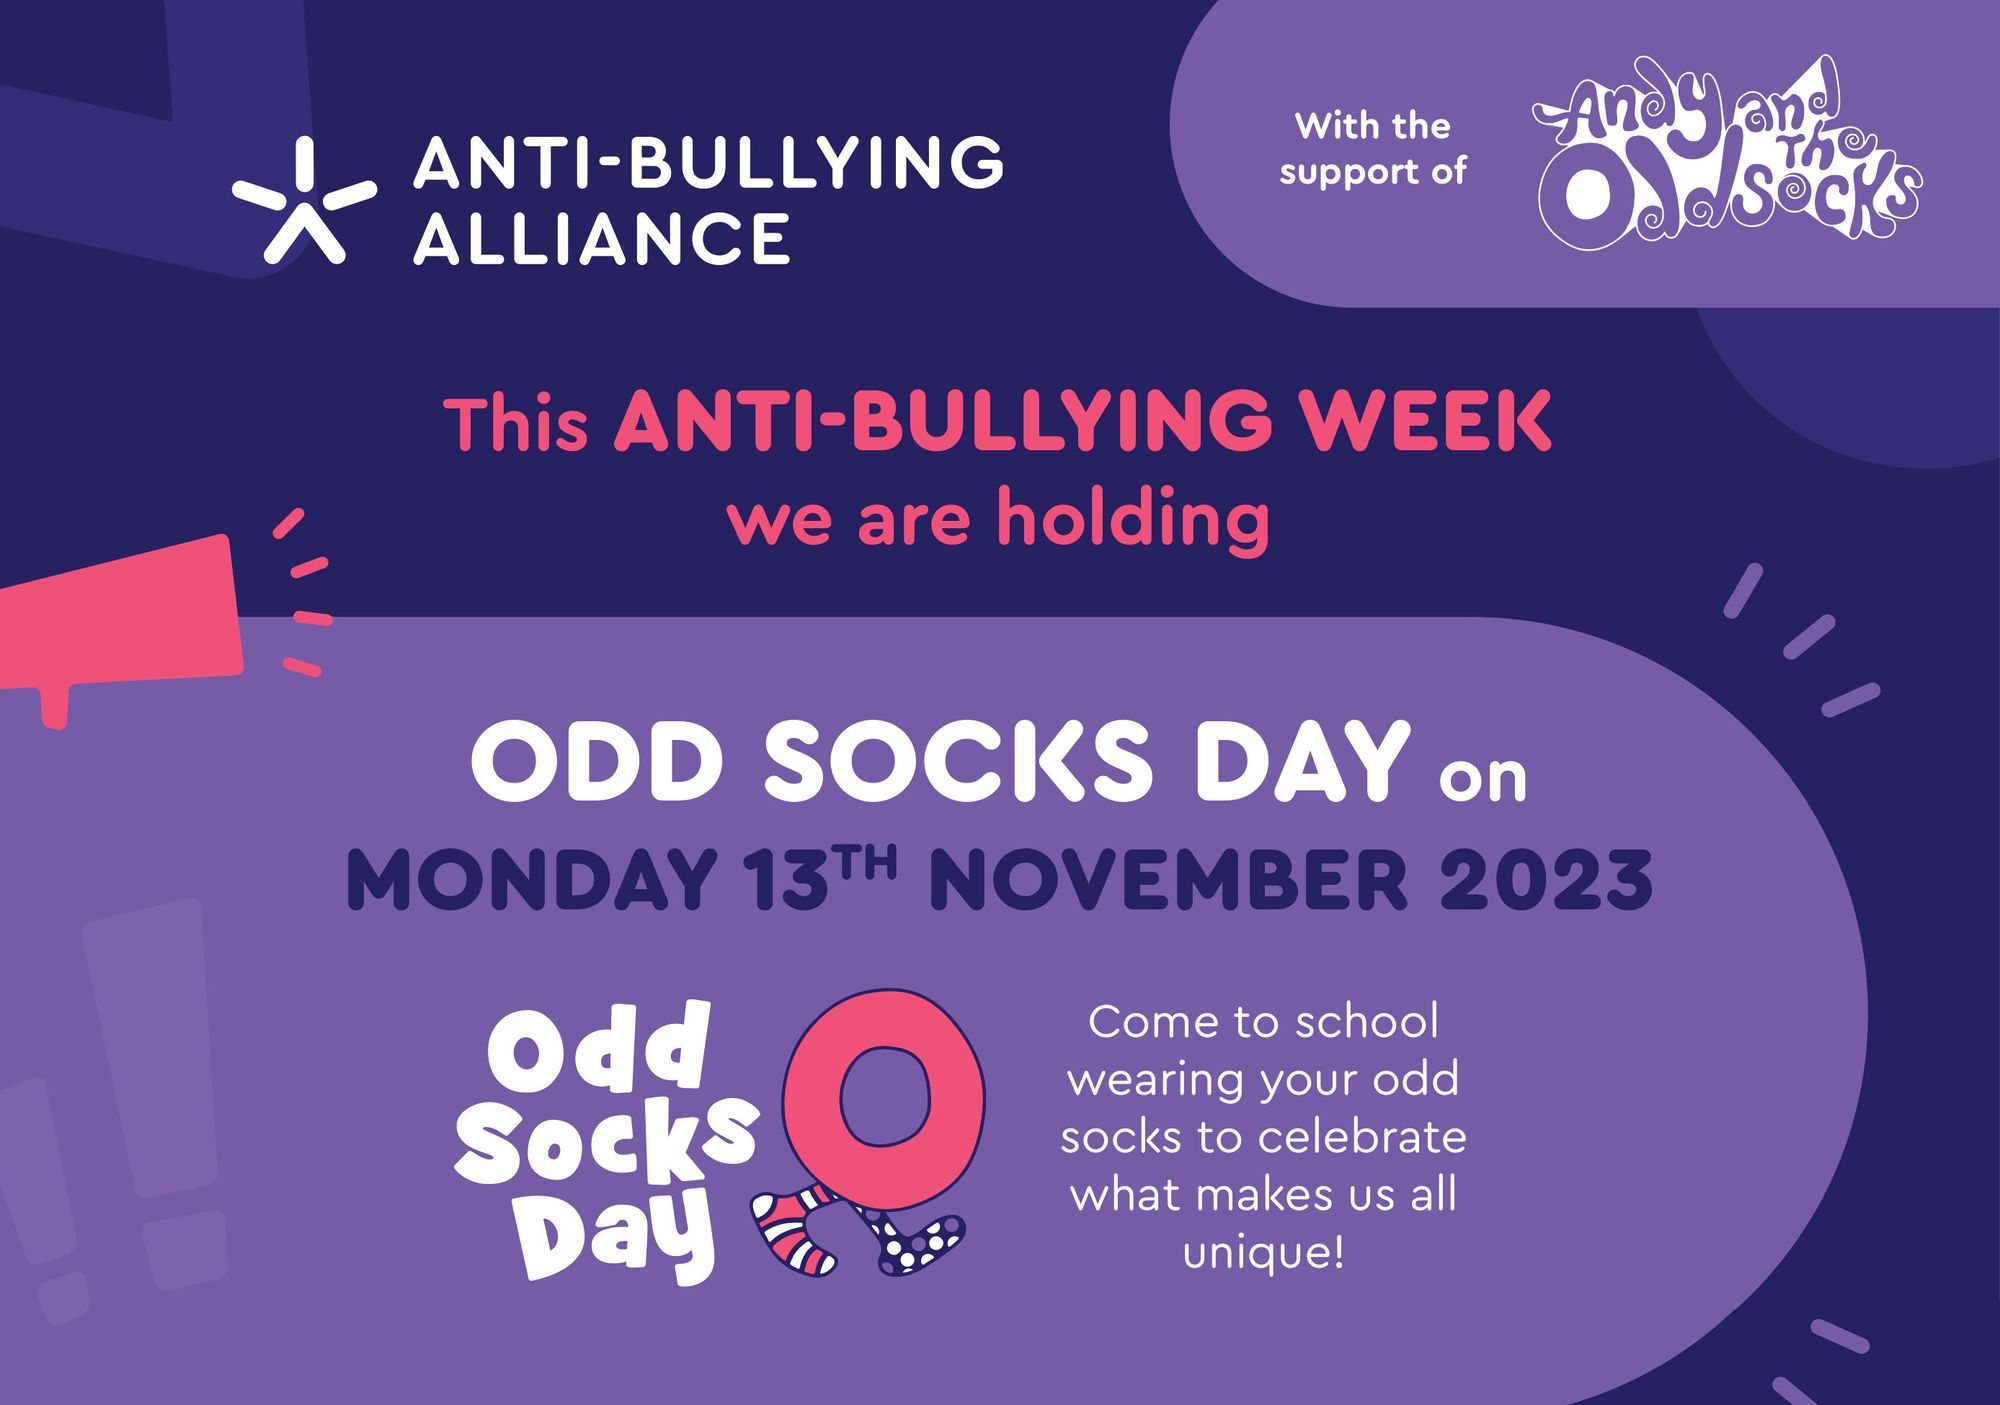 Anti-Bullying Week Odd Socks Day - Monday 13th November